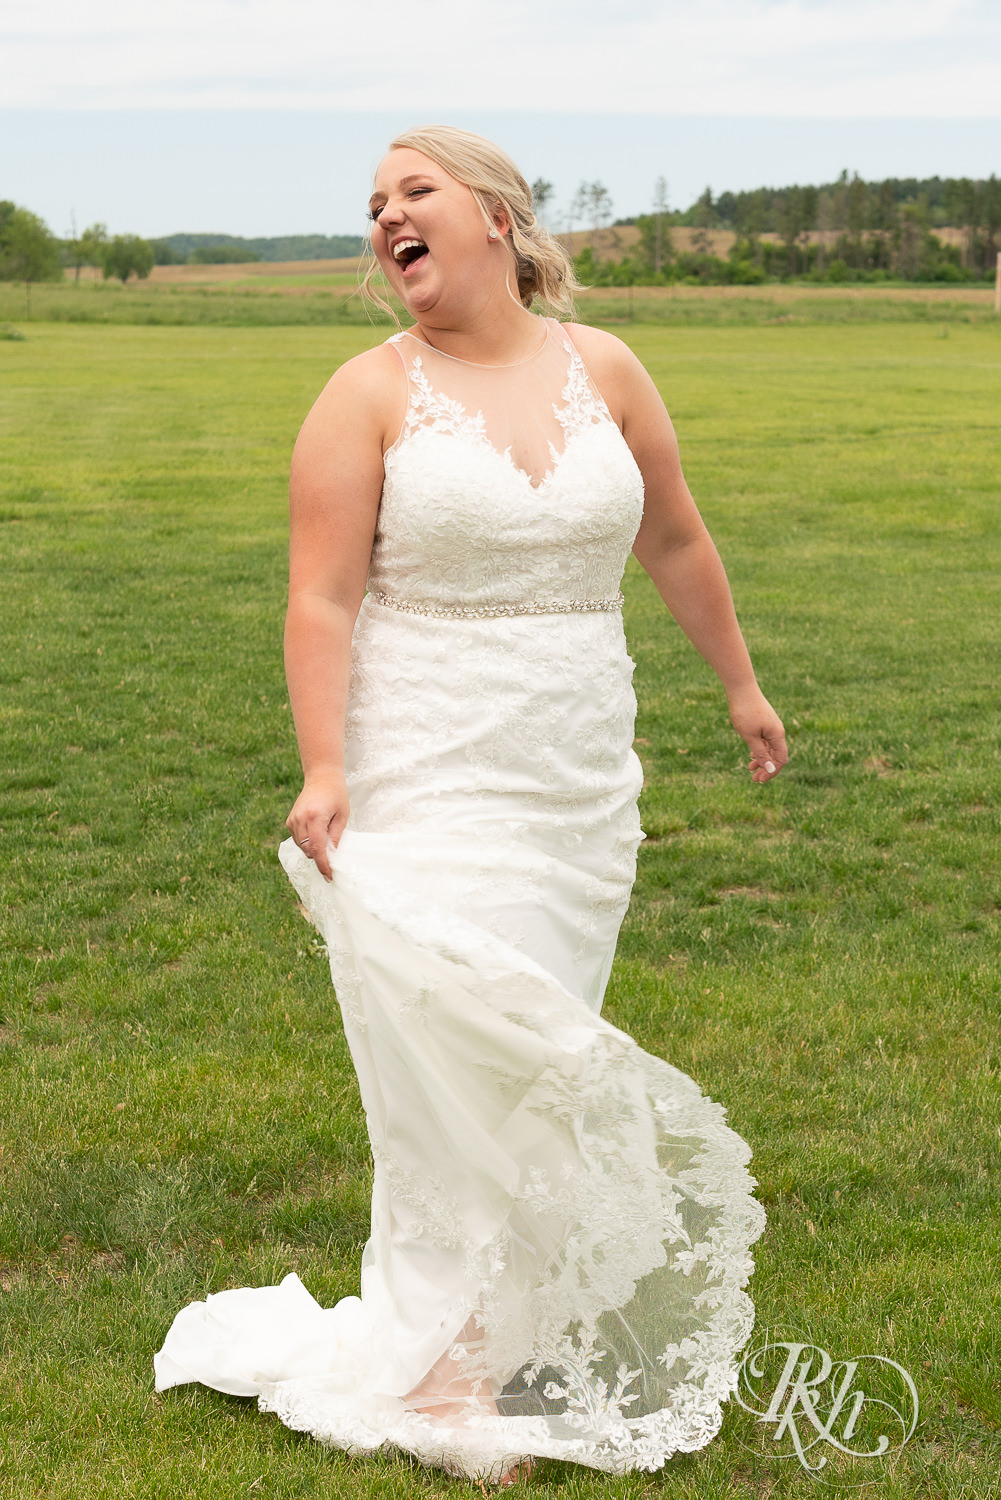 Bride laughs in field at Barn at Mirror Lake in Mondovi, Wisconsin.